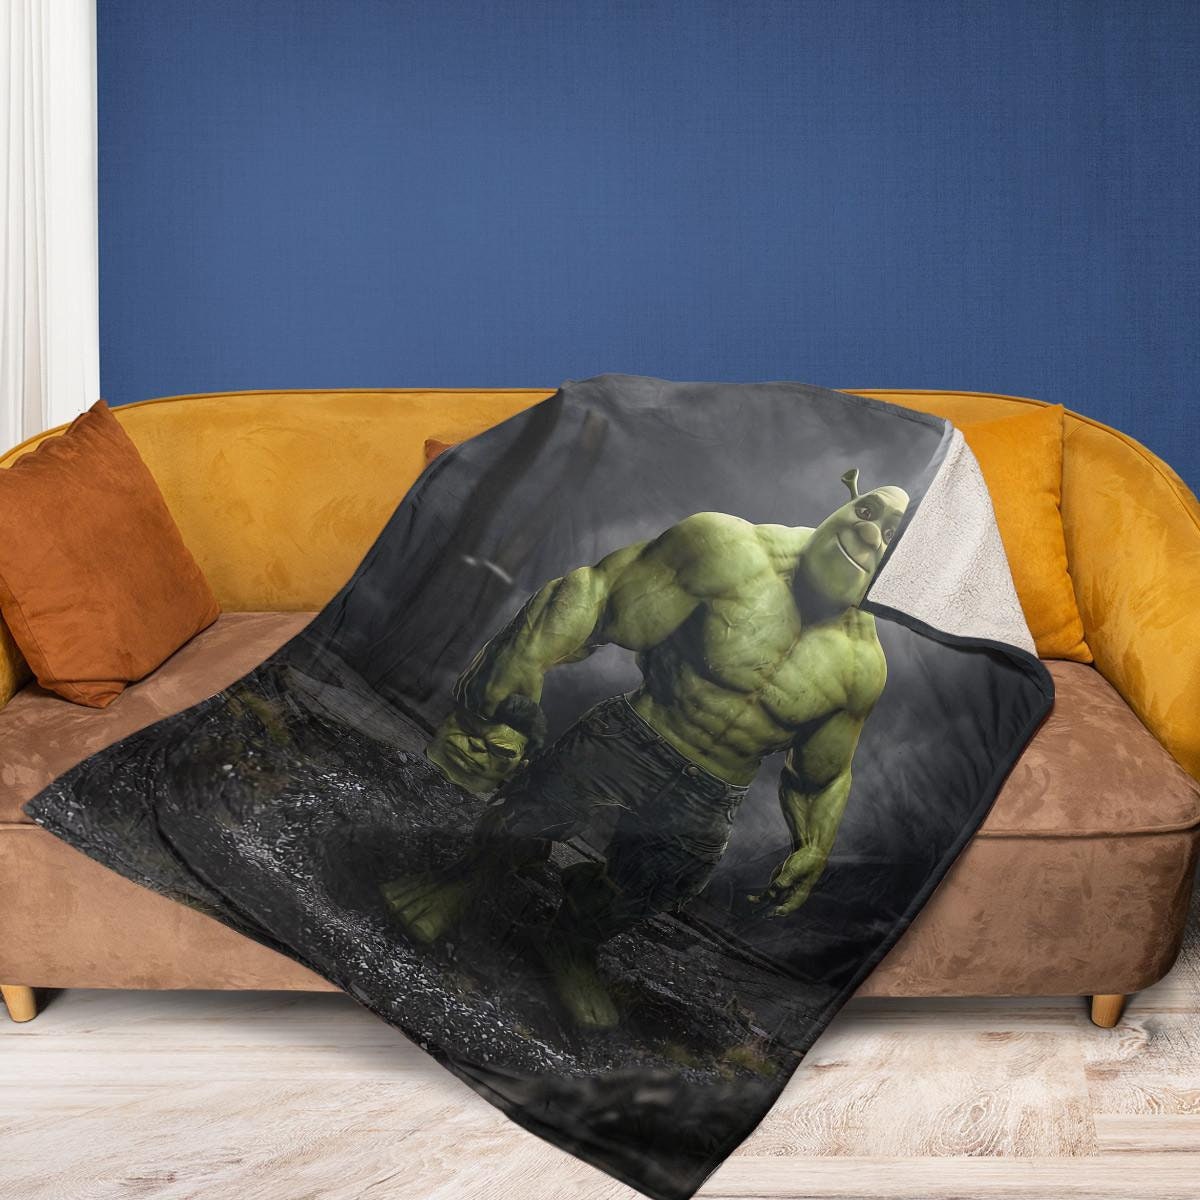 Hulk Shrek Sherpa Fleece Blanket